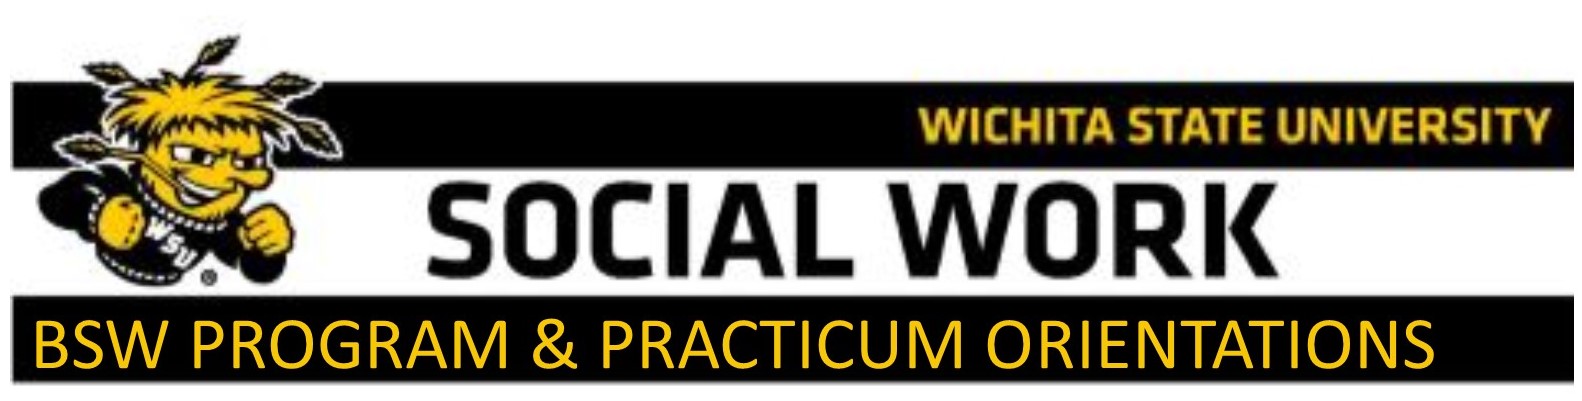 BSW Program & Practicum Orientation logo